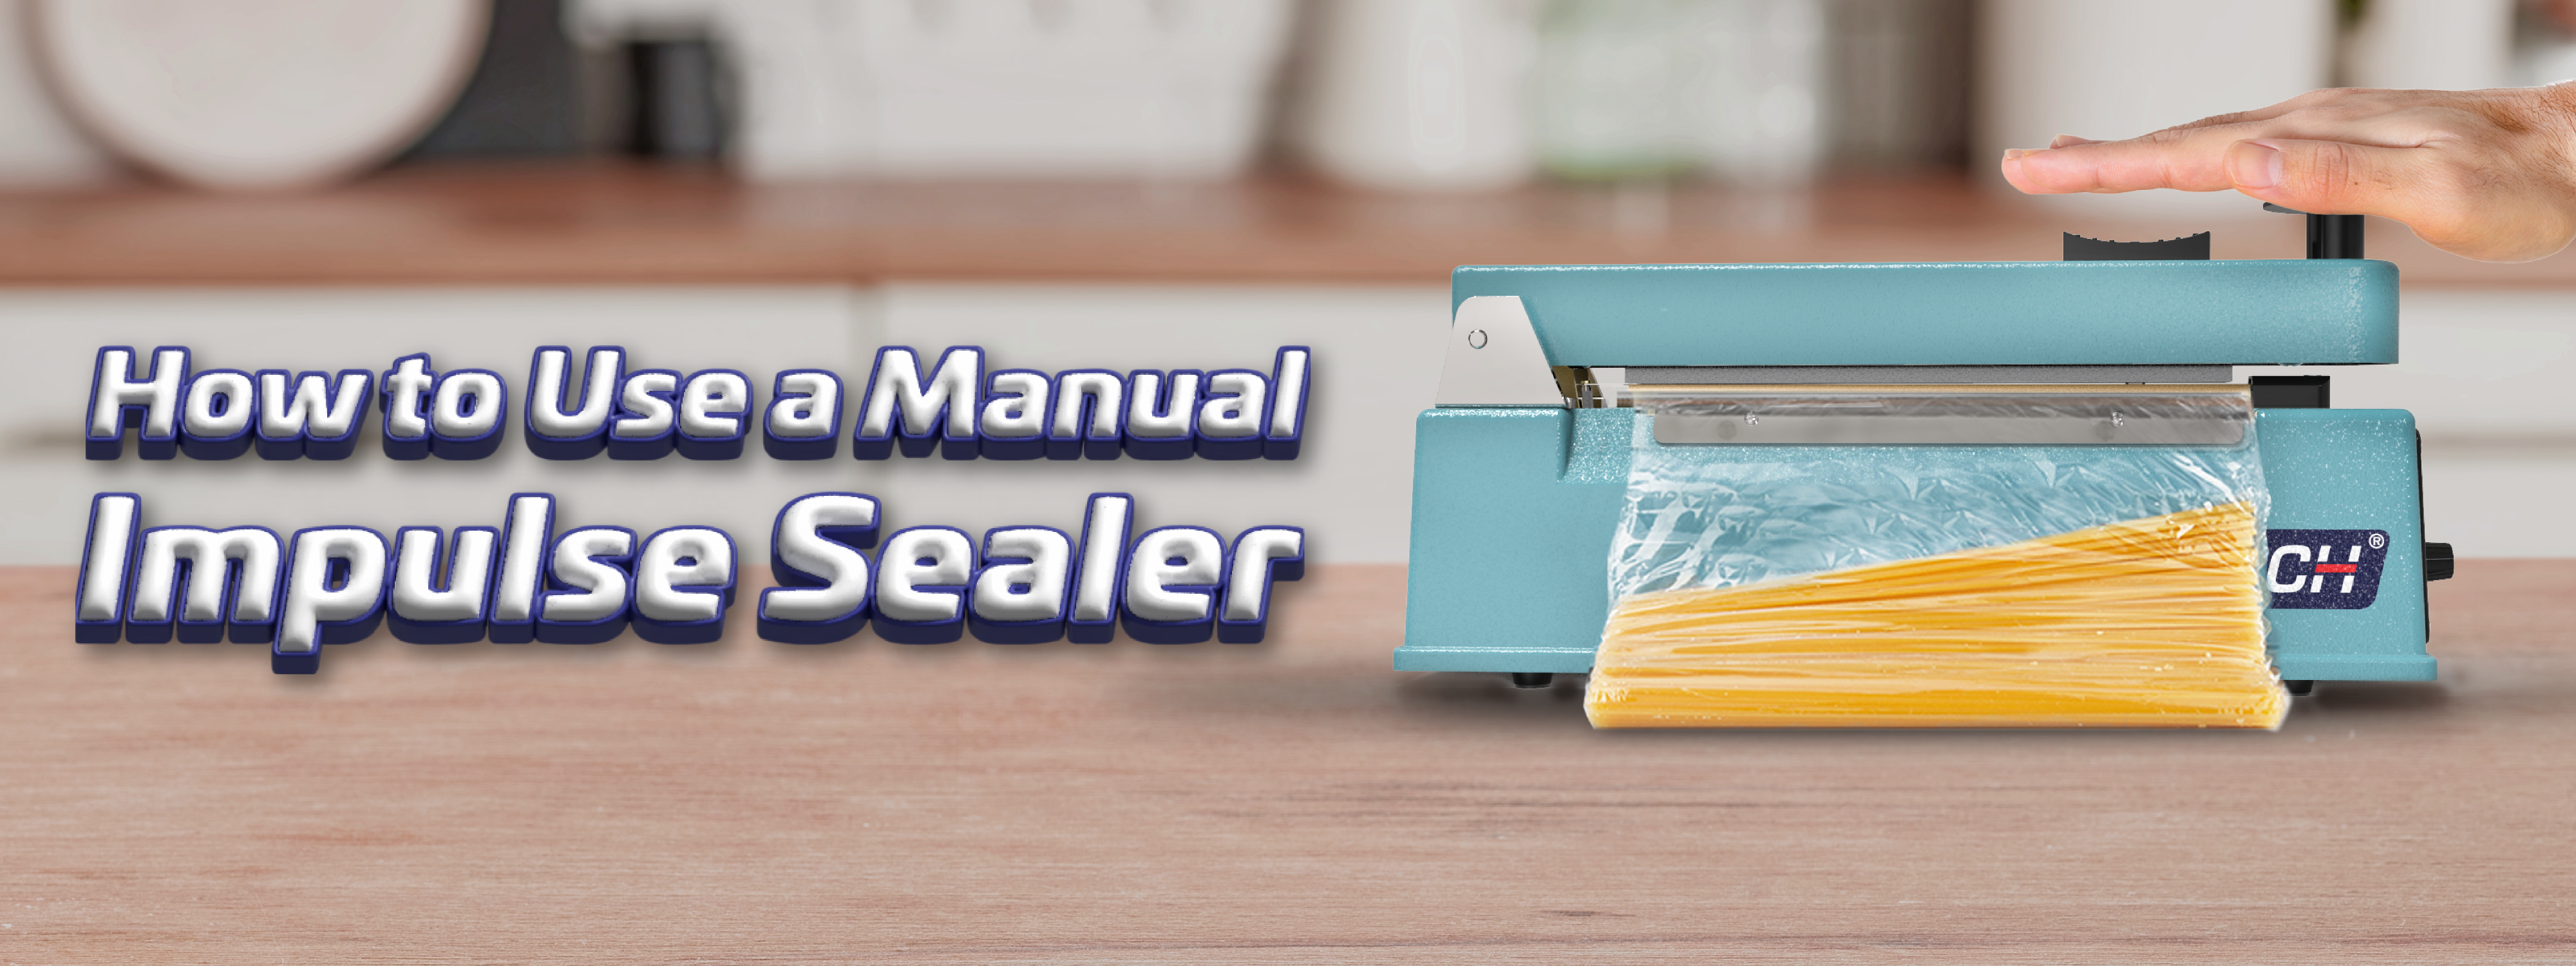 Manual impulse sealer machine sealing a plastic bag with food product inside